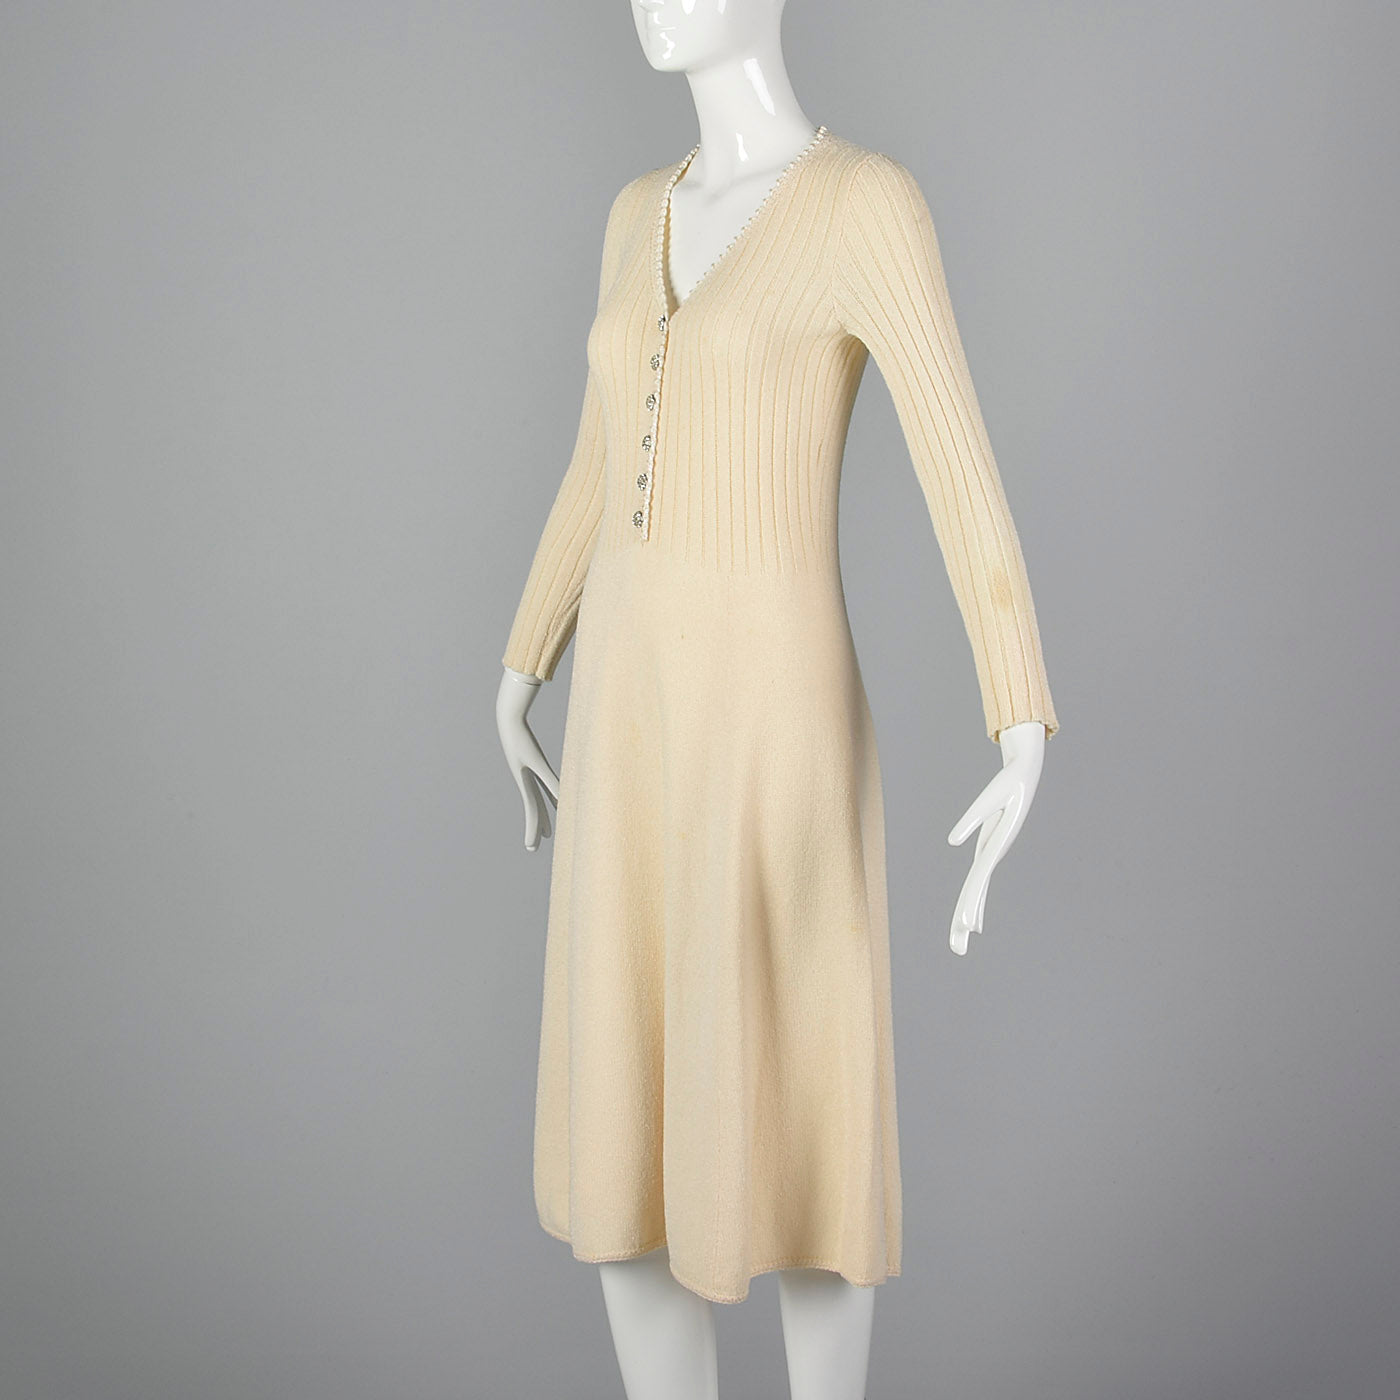 XS-Medium 1980s Cream Sweater Dress